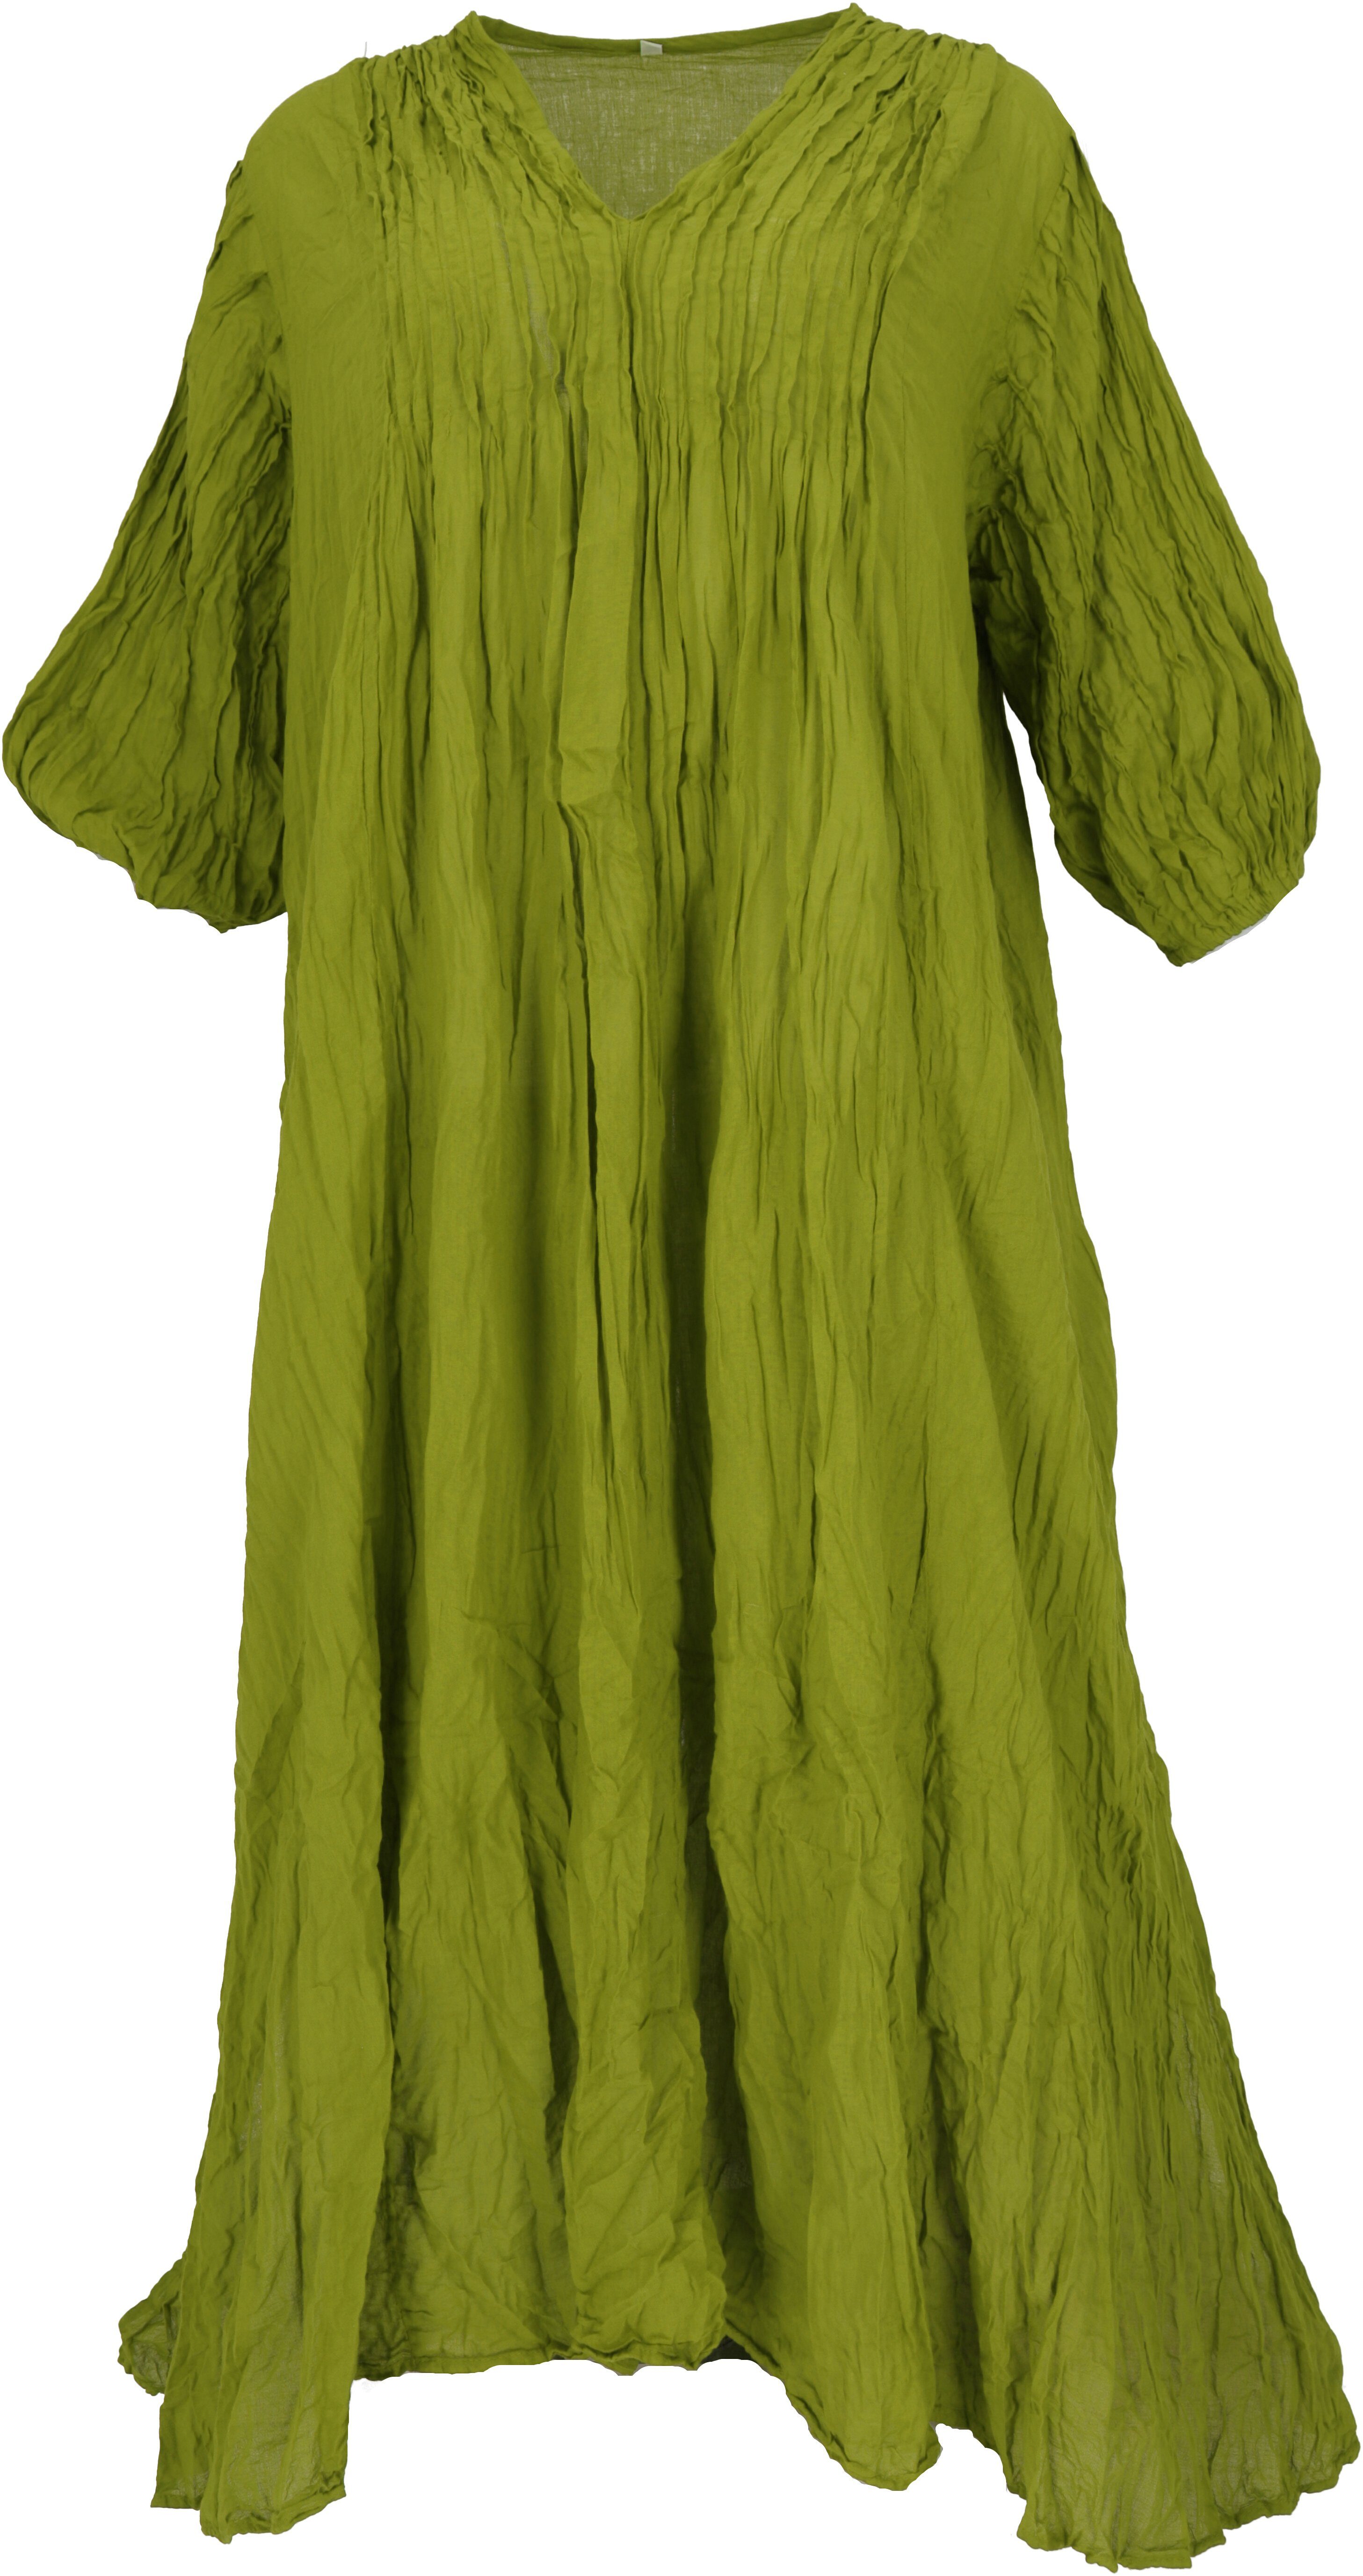 Bekleidung Maxikleid, alternative Guru-Shop lemongrün luftiges Sommerkleid für.. Midikleid Boho langes